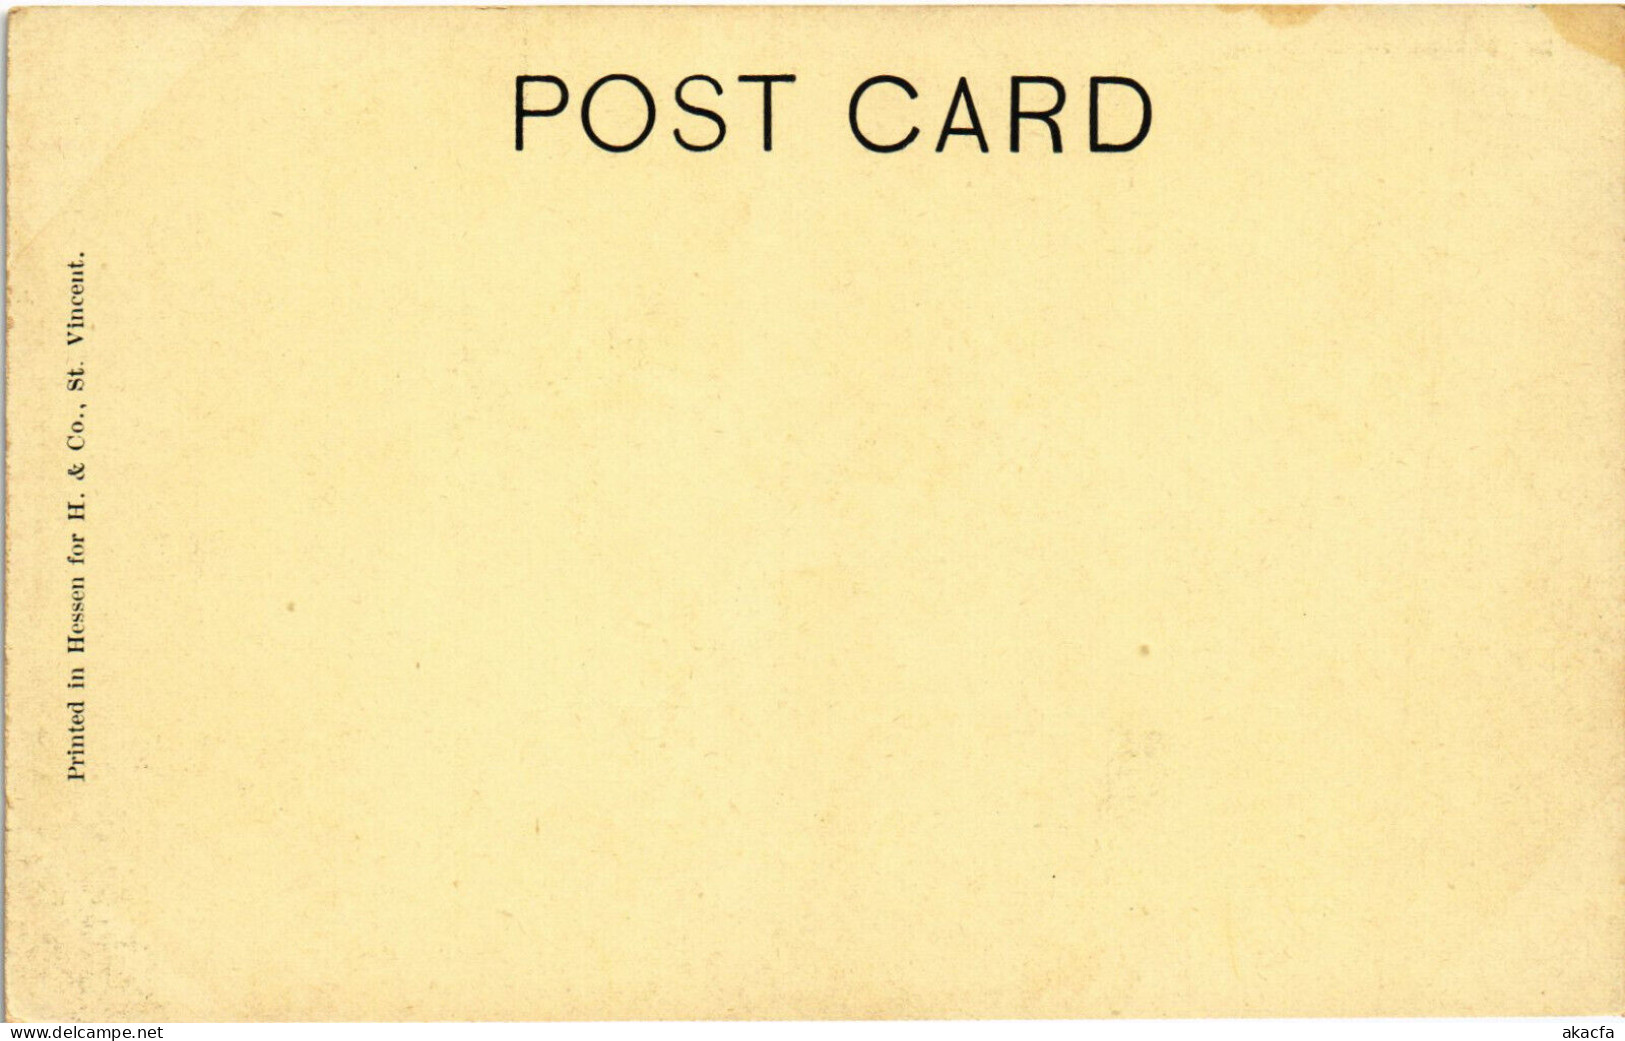 PC VIRGIN ISLANDS MARINE VIEW SPRING Vintage Postcard (b52260) - Virgin Islands, British